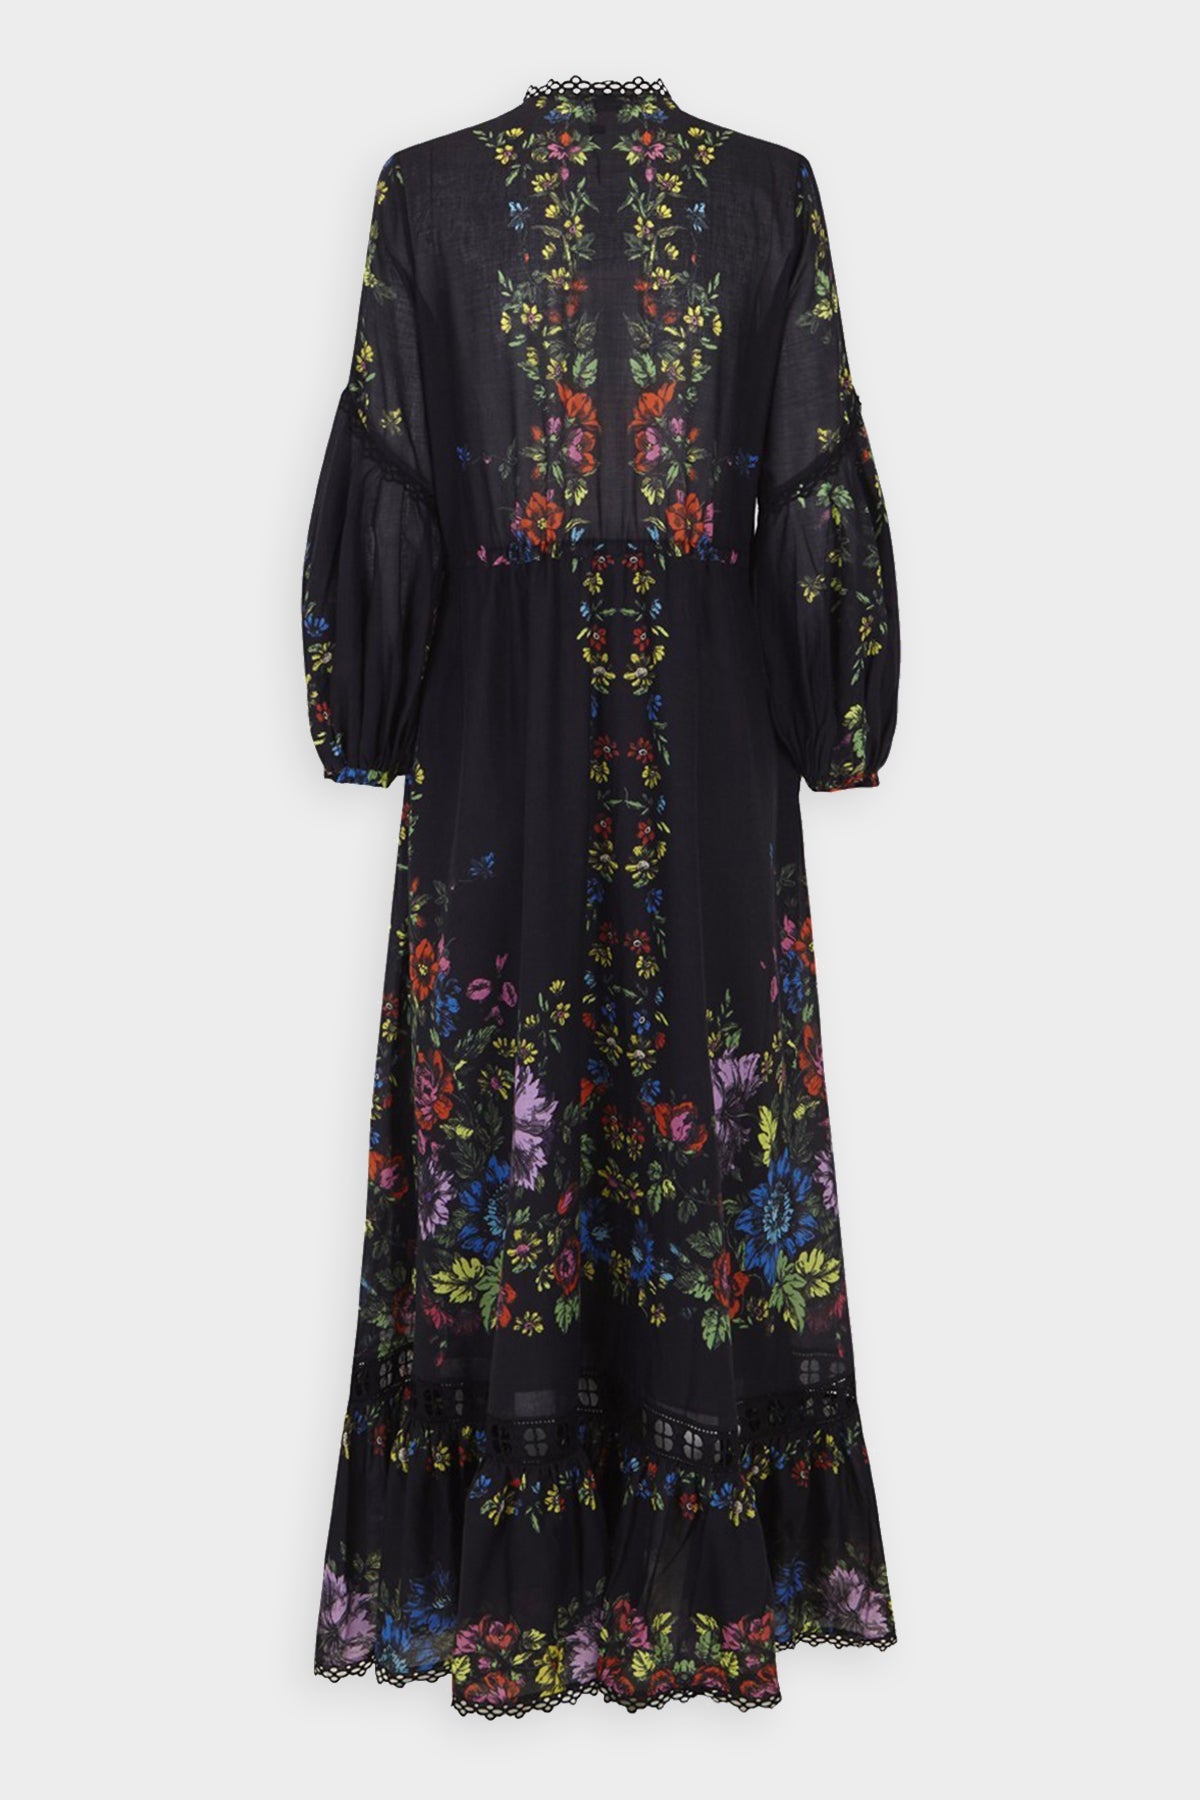 Ganna Long Dress in Garden Black Print - shop-olivia.com